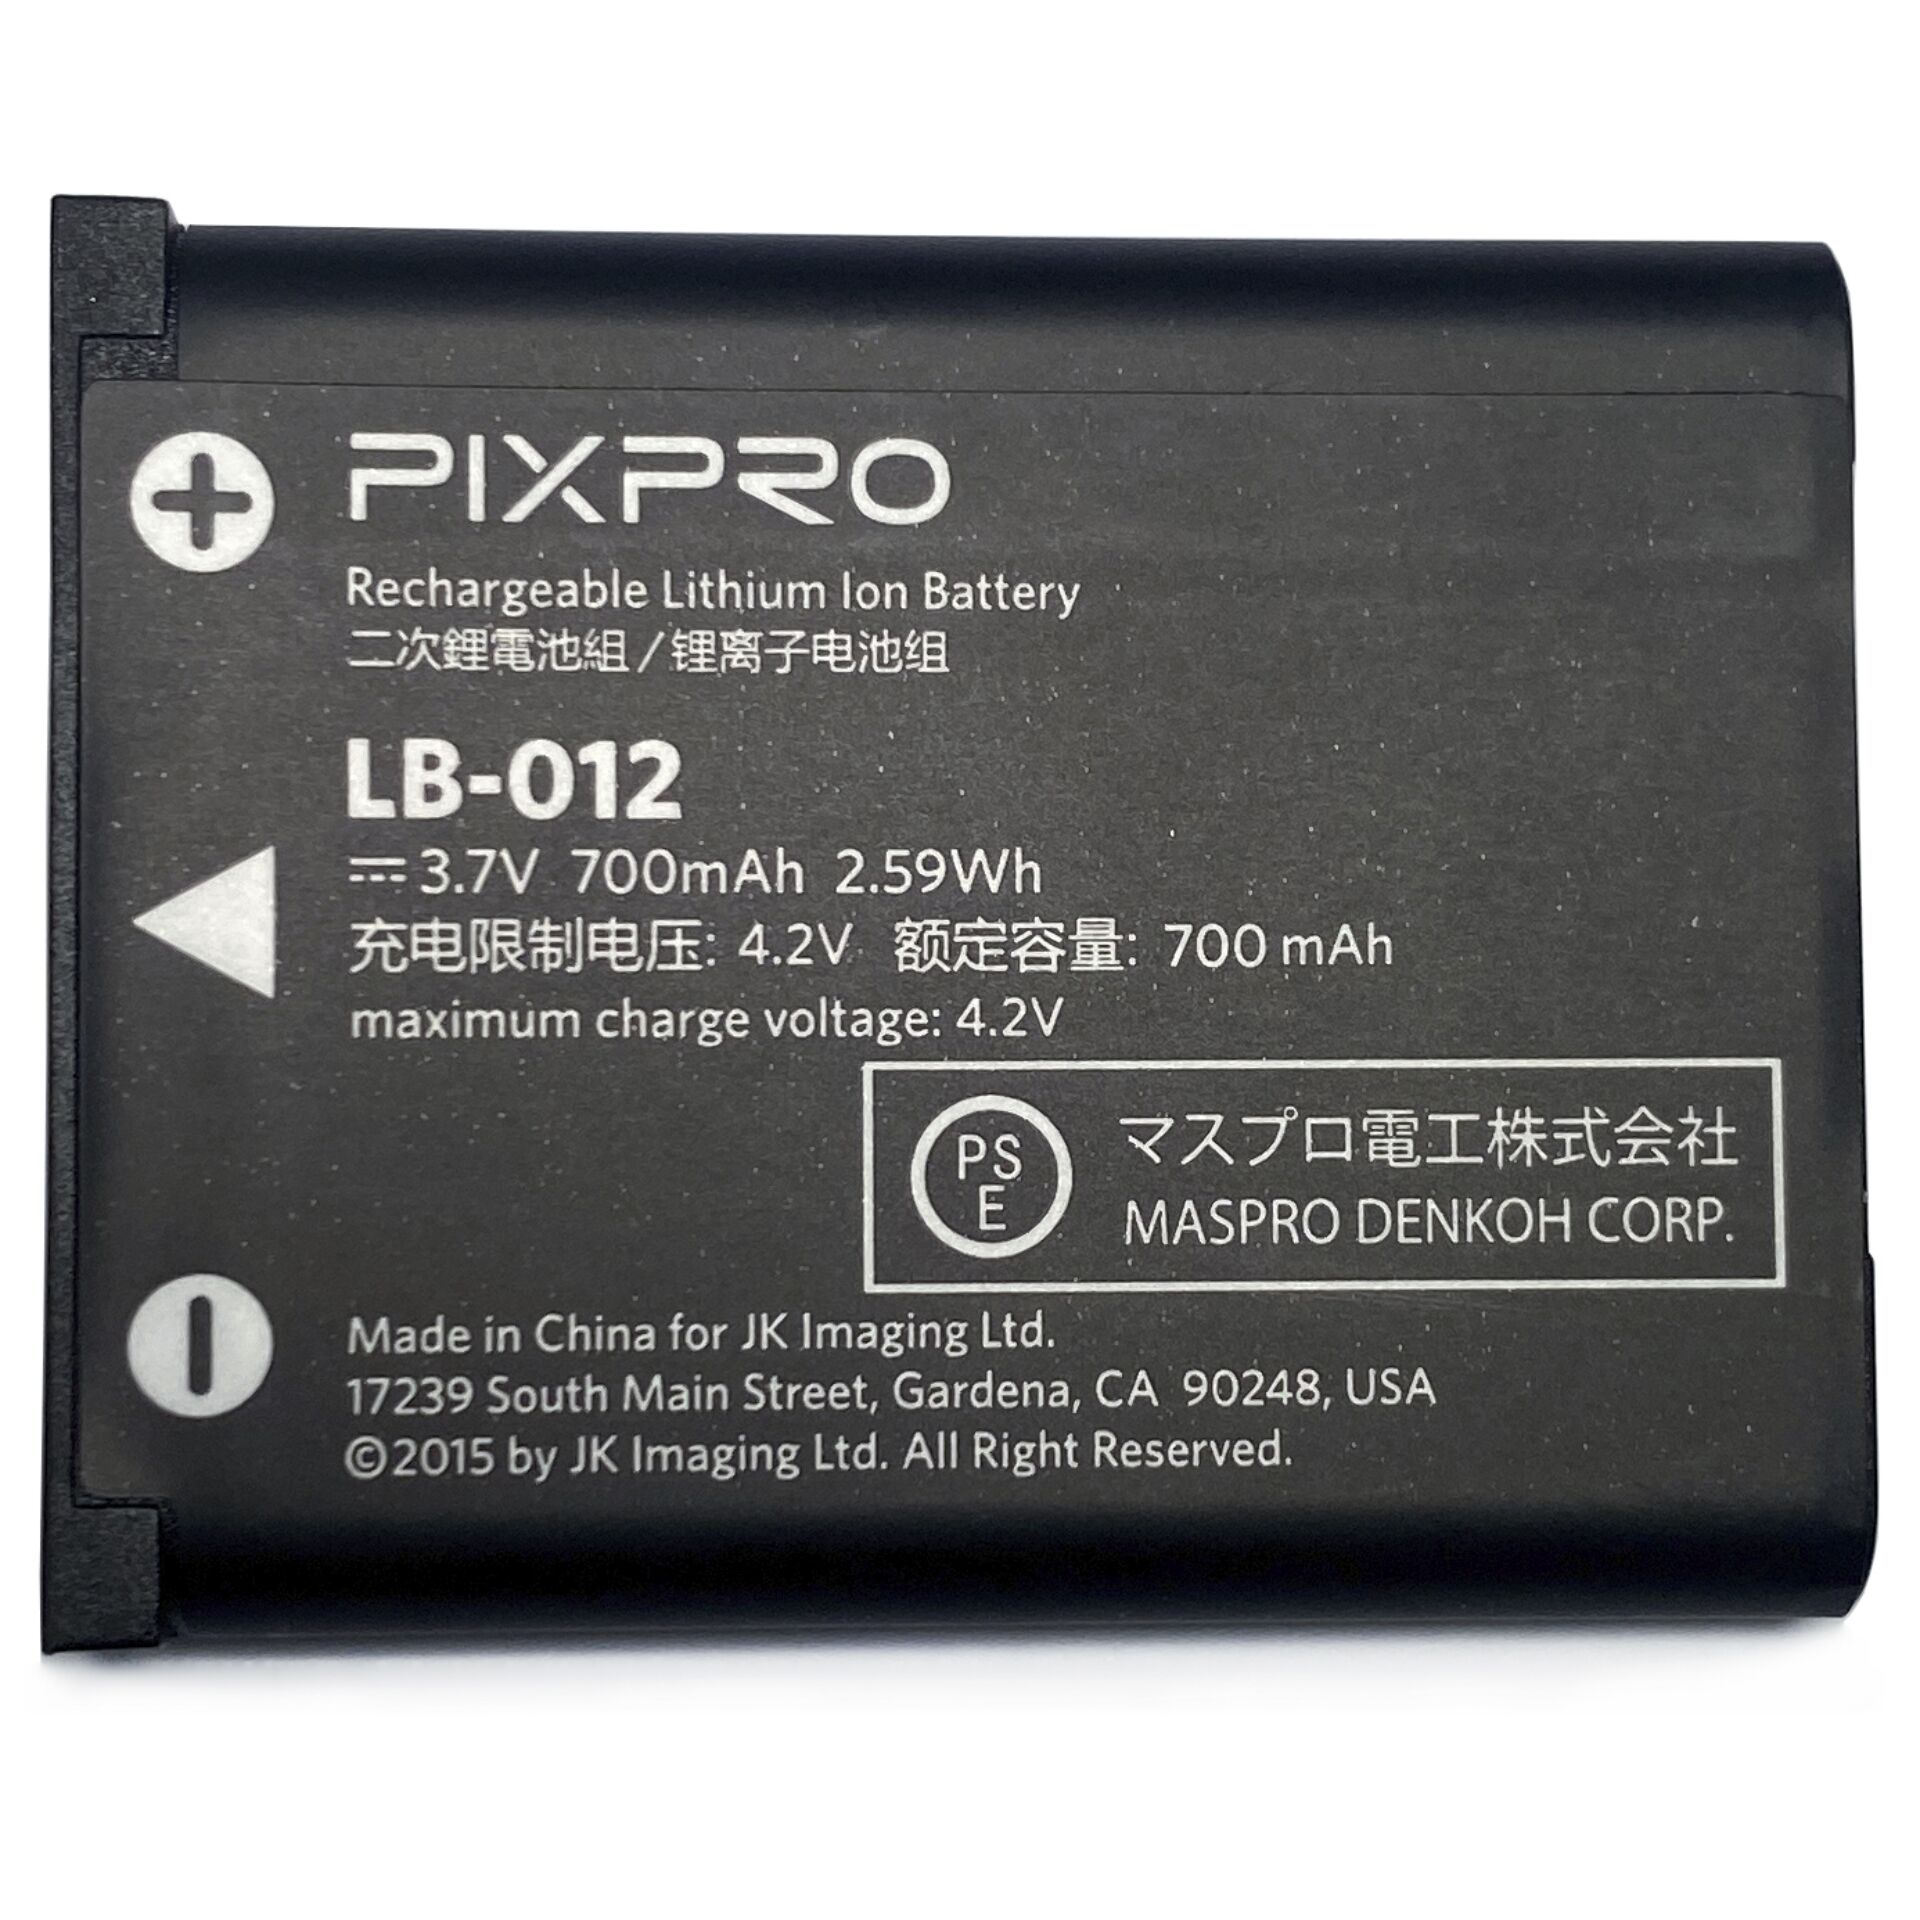 Kodak Pixpro LB-012